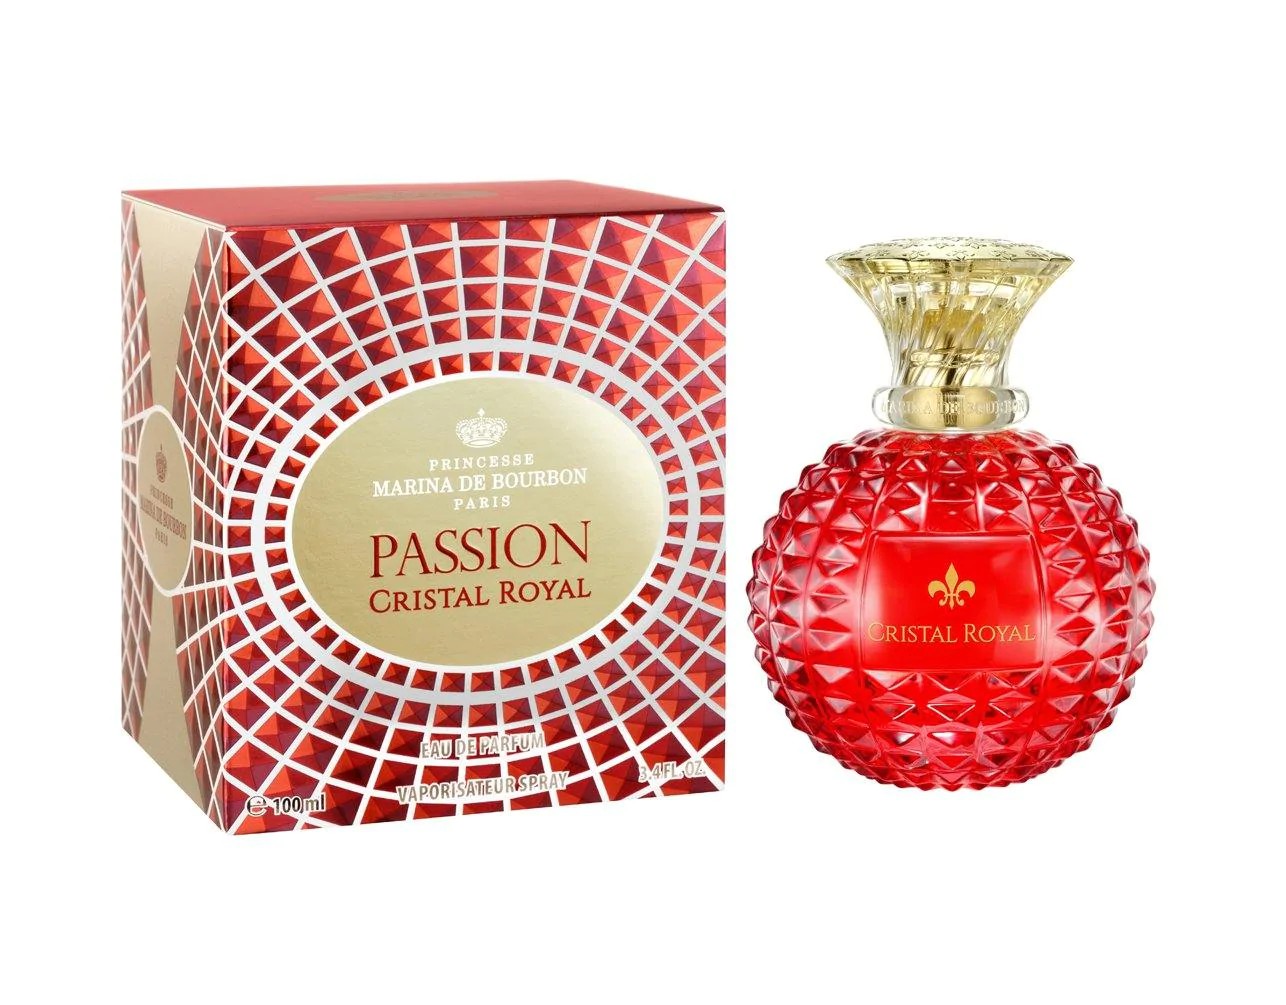 Perfume Princesse Marina de Bourbon Passion Cristal Royal - EDP 100ml -  Marlene Beauty - Ampla gama de perfumes importados e produtos de beleza